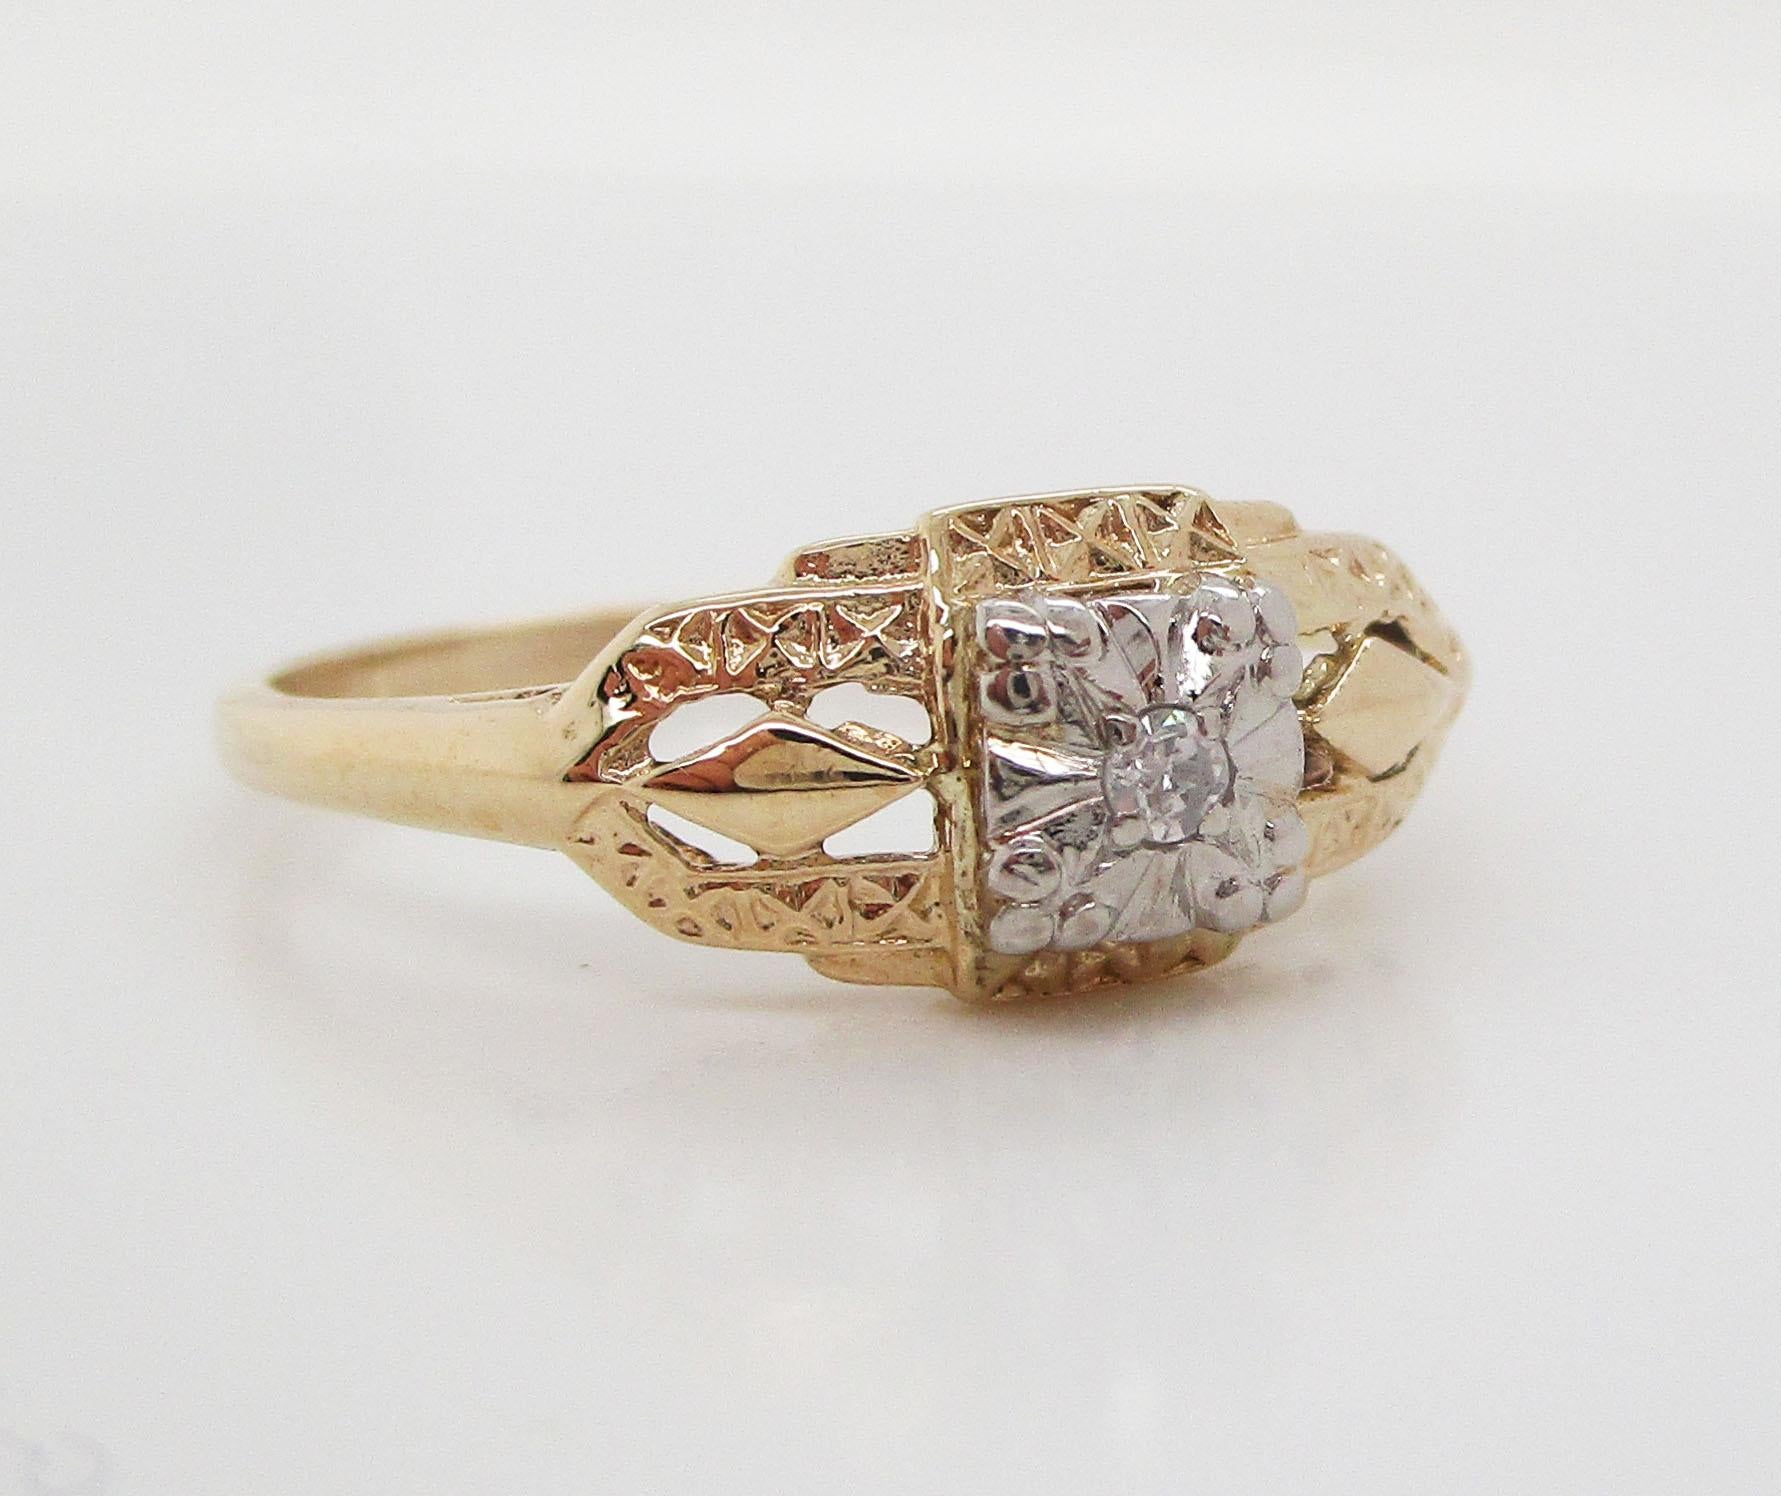 Modernist Vintage Midcentury 14 Karat White and Yellow Gold Diamond Engagement Ring